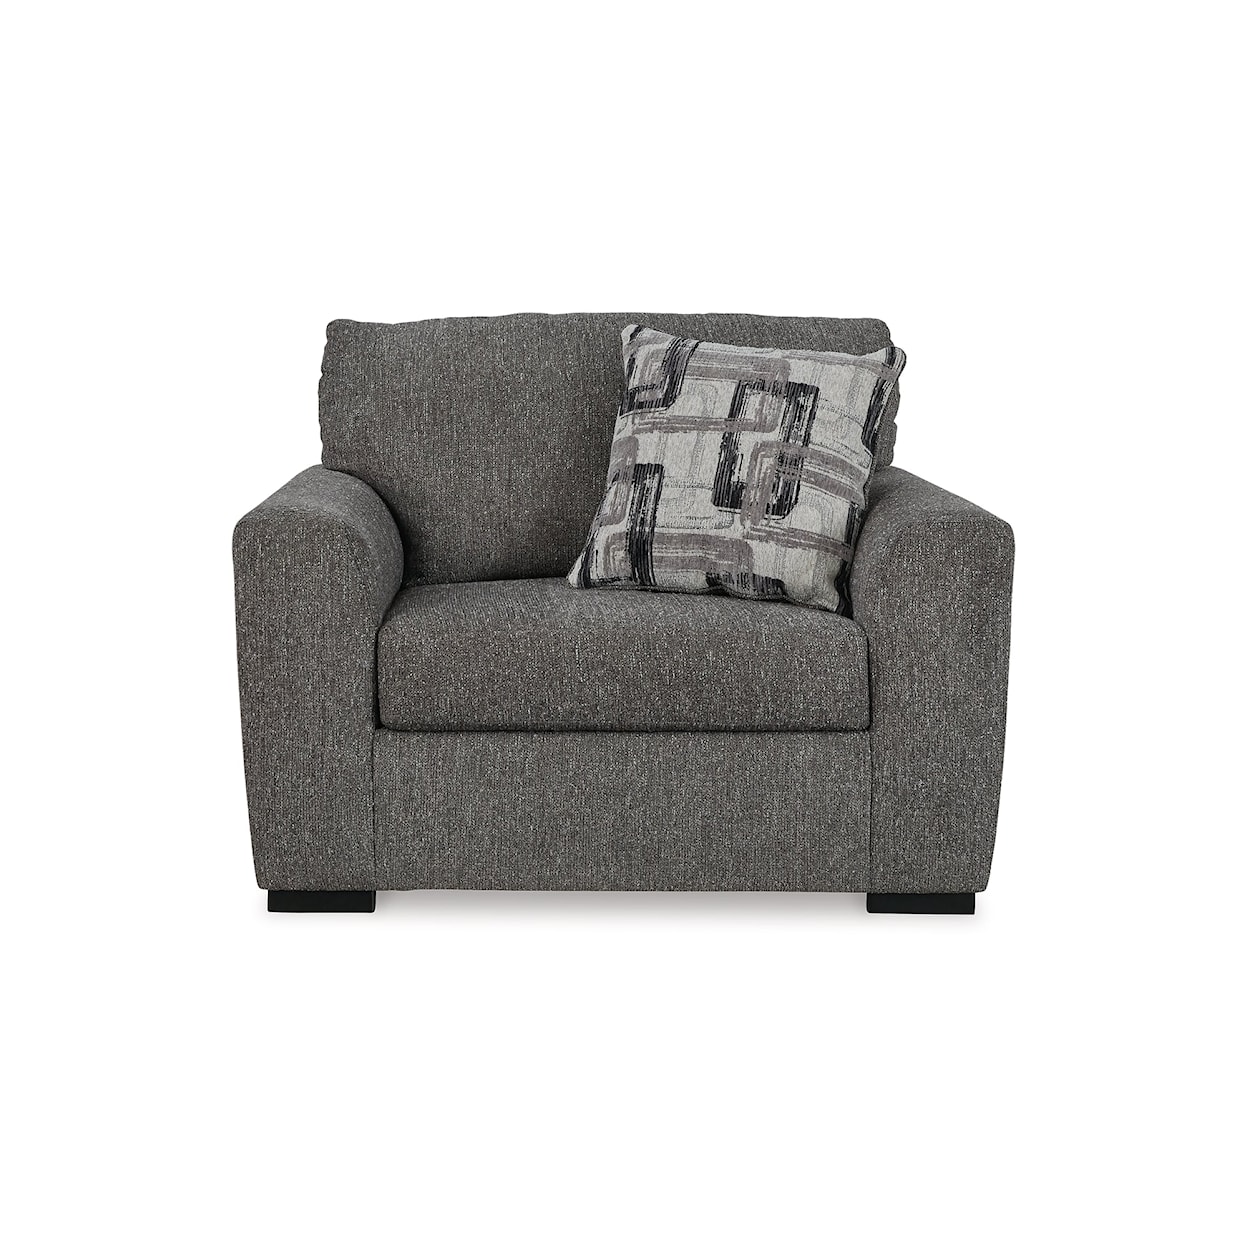 Ashley Furniture Signature Design Gardiner Chair and a Half